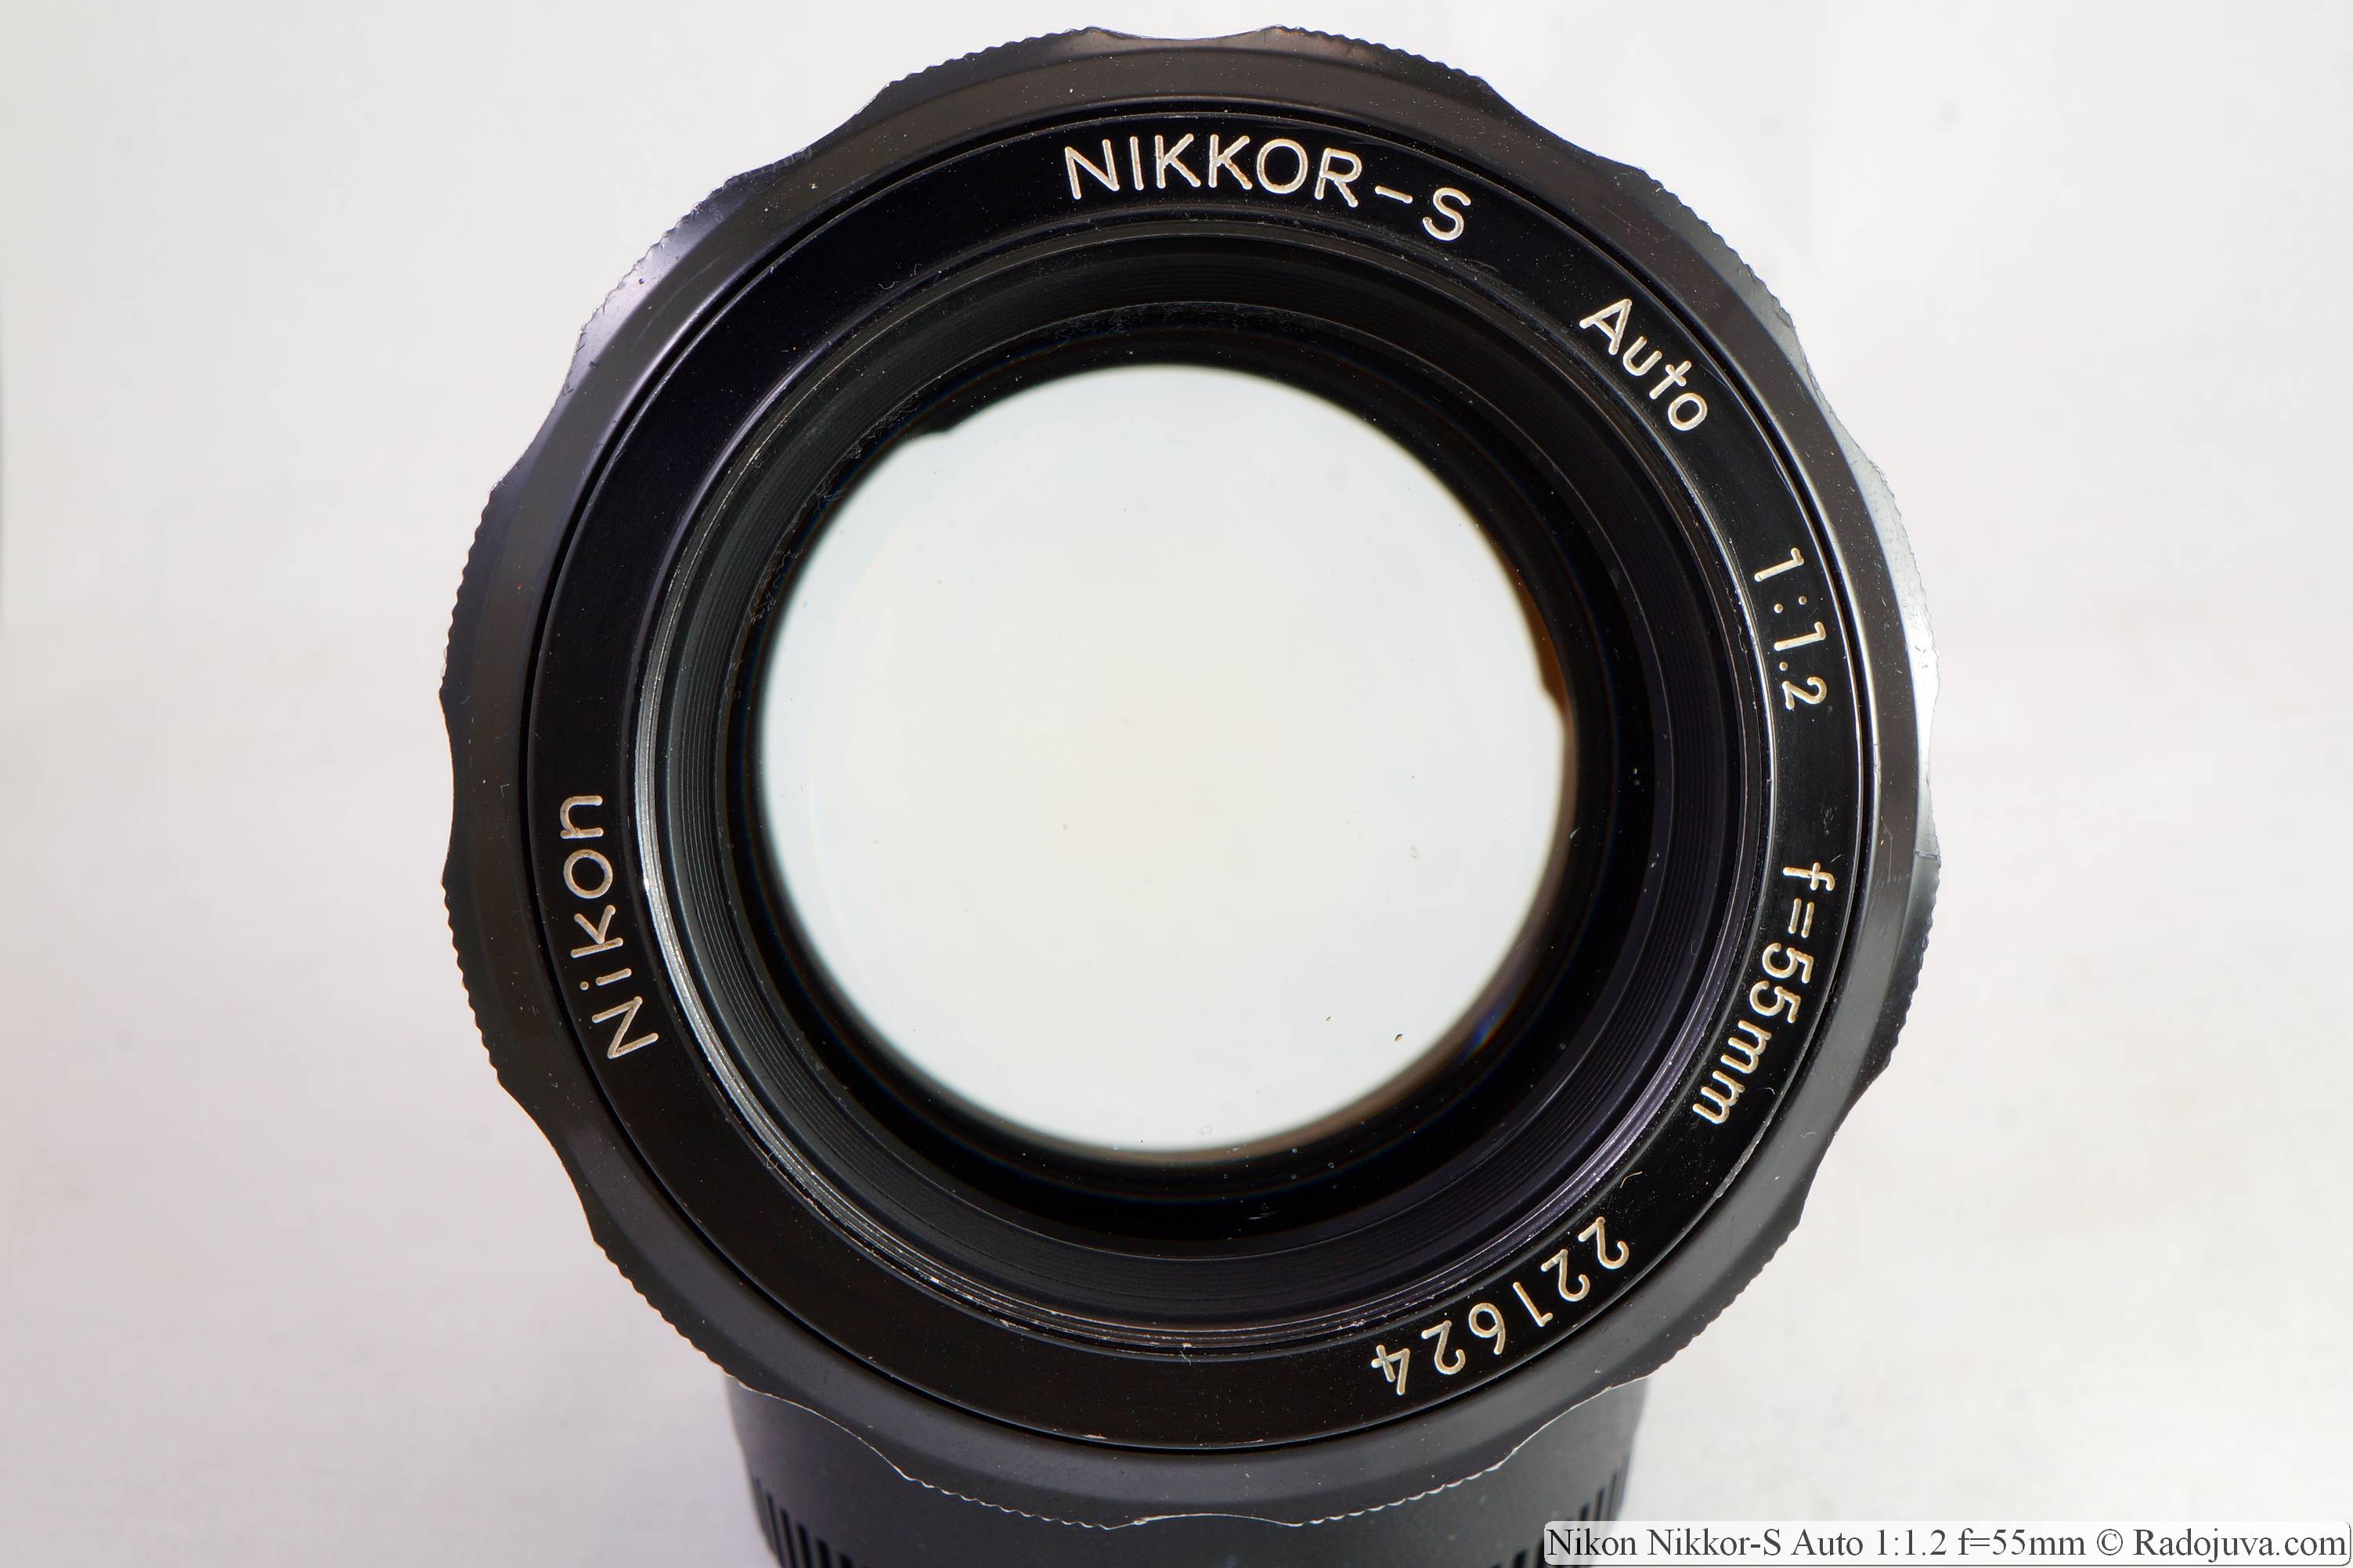  Nikon Nikkor-S Auto 1:1.2 f=55mm